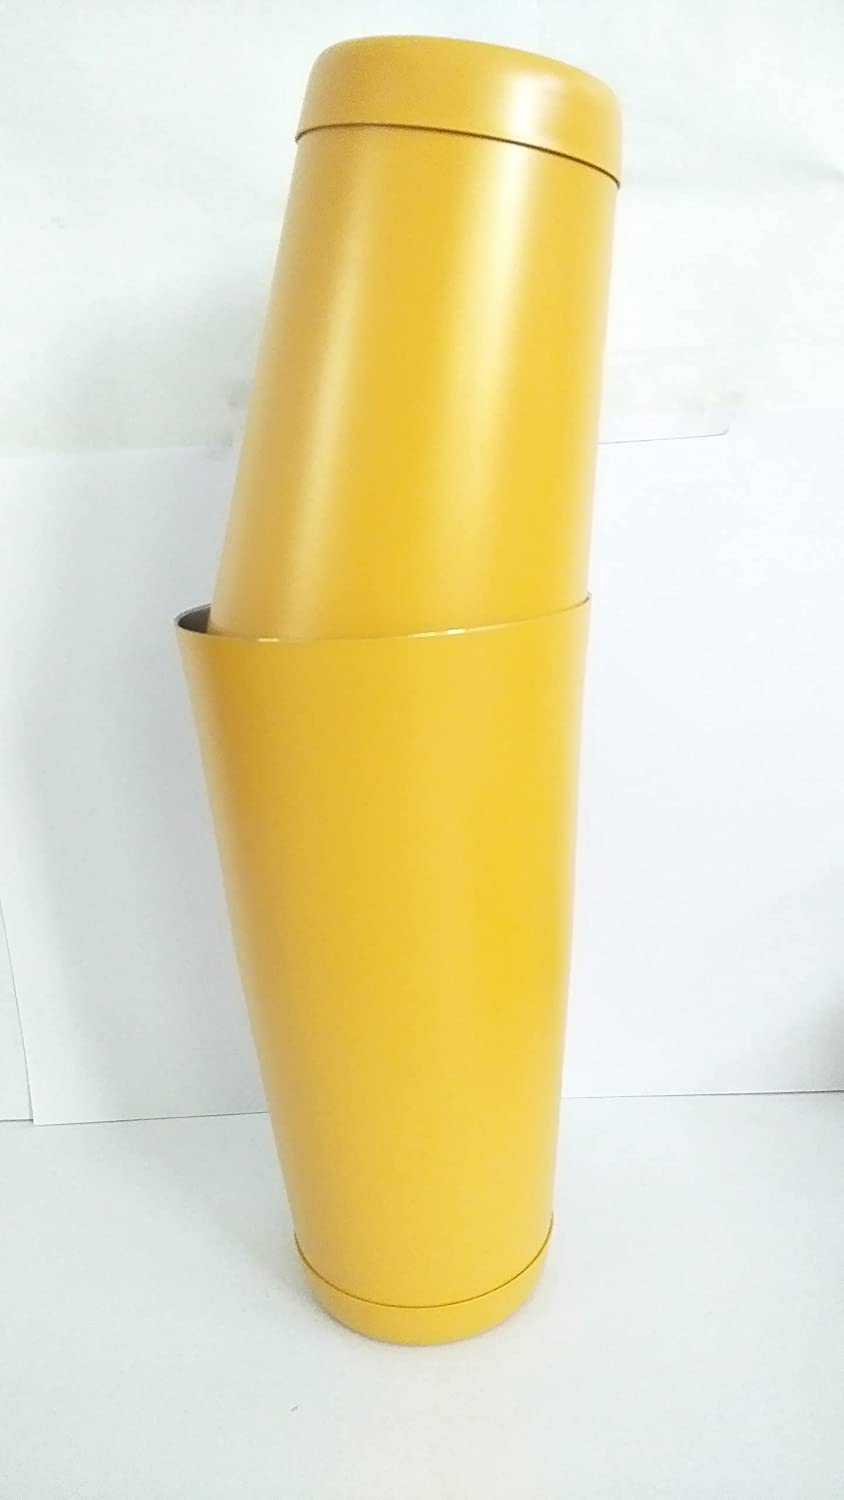 NJ matt Yellow Stainless Steel Boston Shaker, Professional Bartender Cocktail Shaker Set : 540 ml & 840 ml Tins are Dual Weighted Bases, Perfect for Beginner in Bartending : 2 Pcs Set